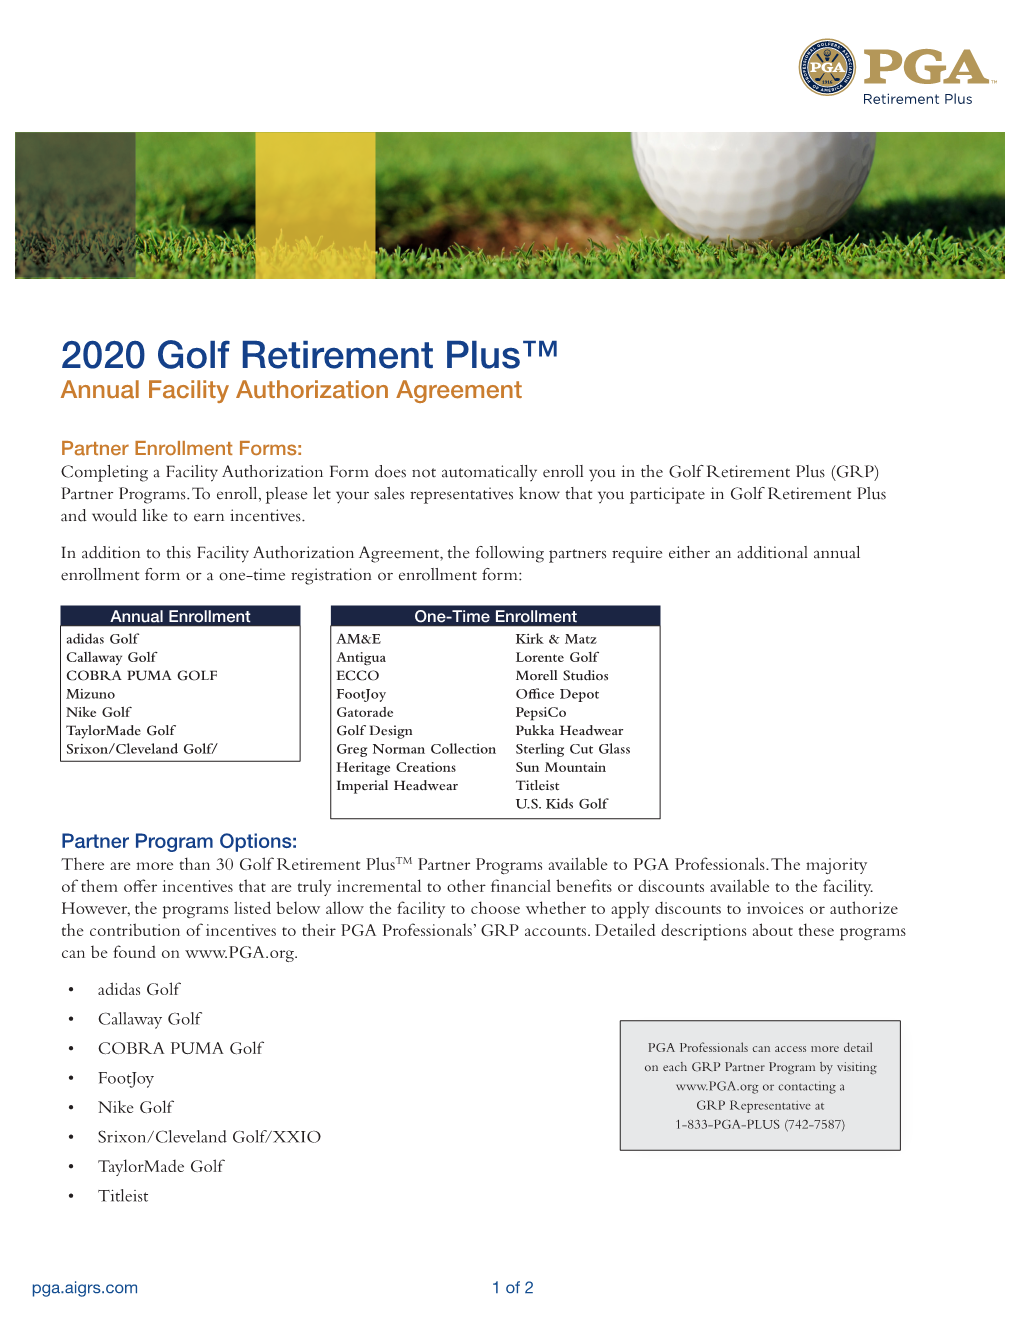 2020 Golf Retirement Plus™ Annual Facility Authorization Agreement